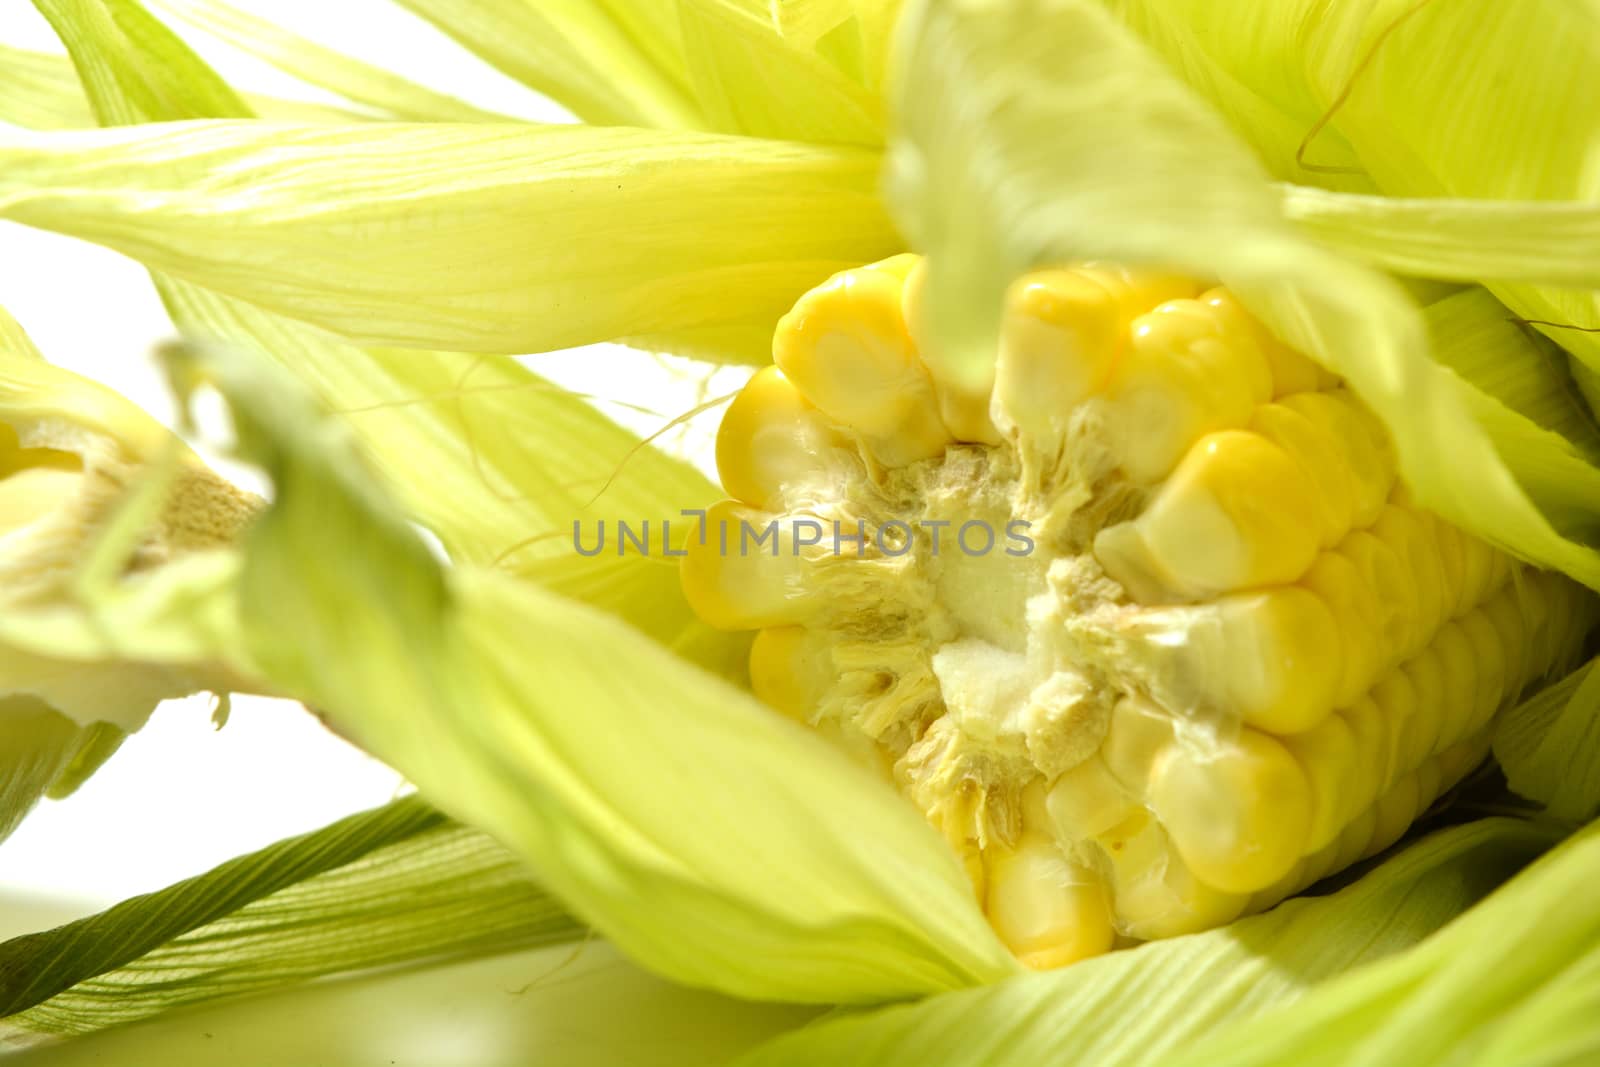 Corn cut into a piece with leaves surrond on white background by lakshmiprasad.maski@gmai.com